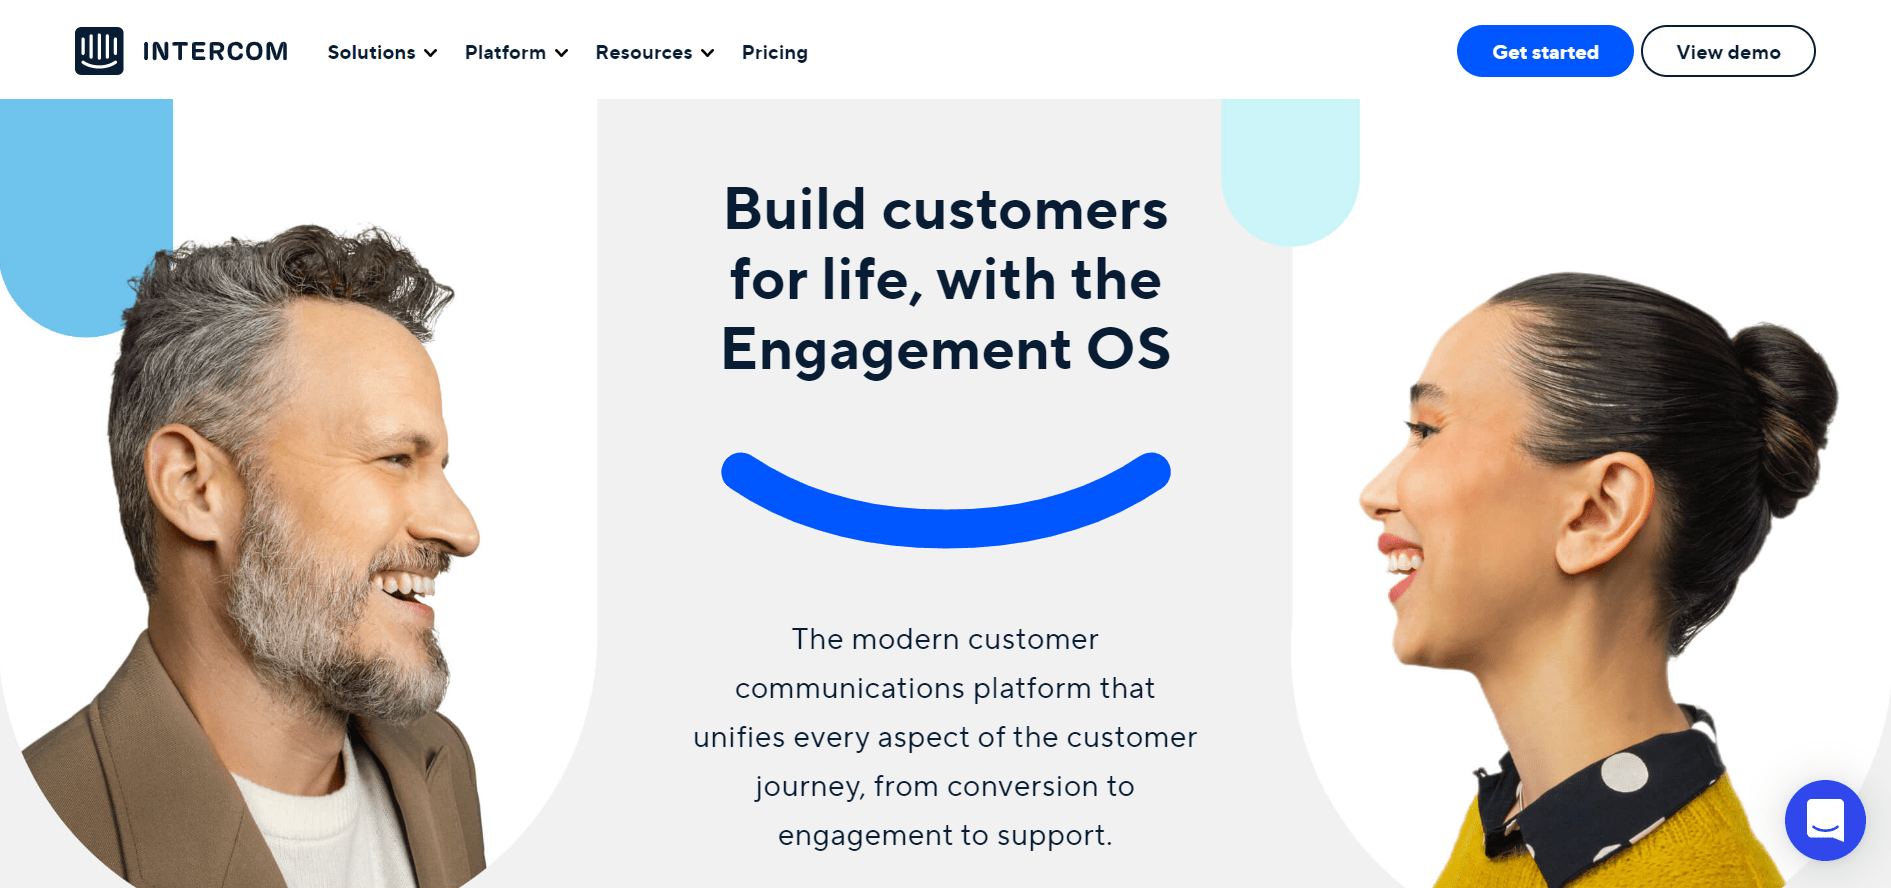 The Engagement OS Intercom